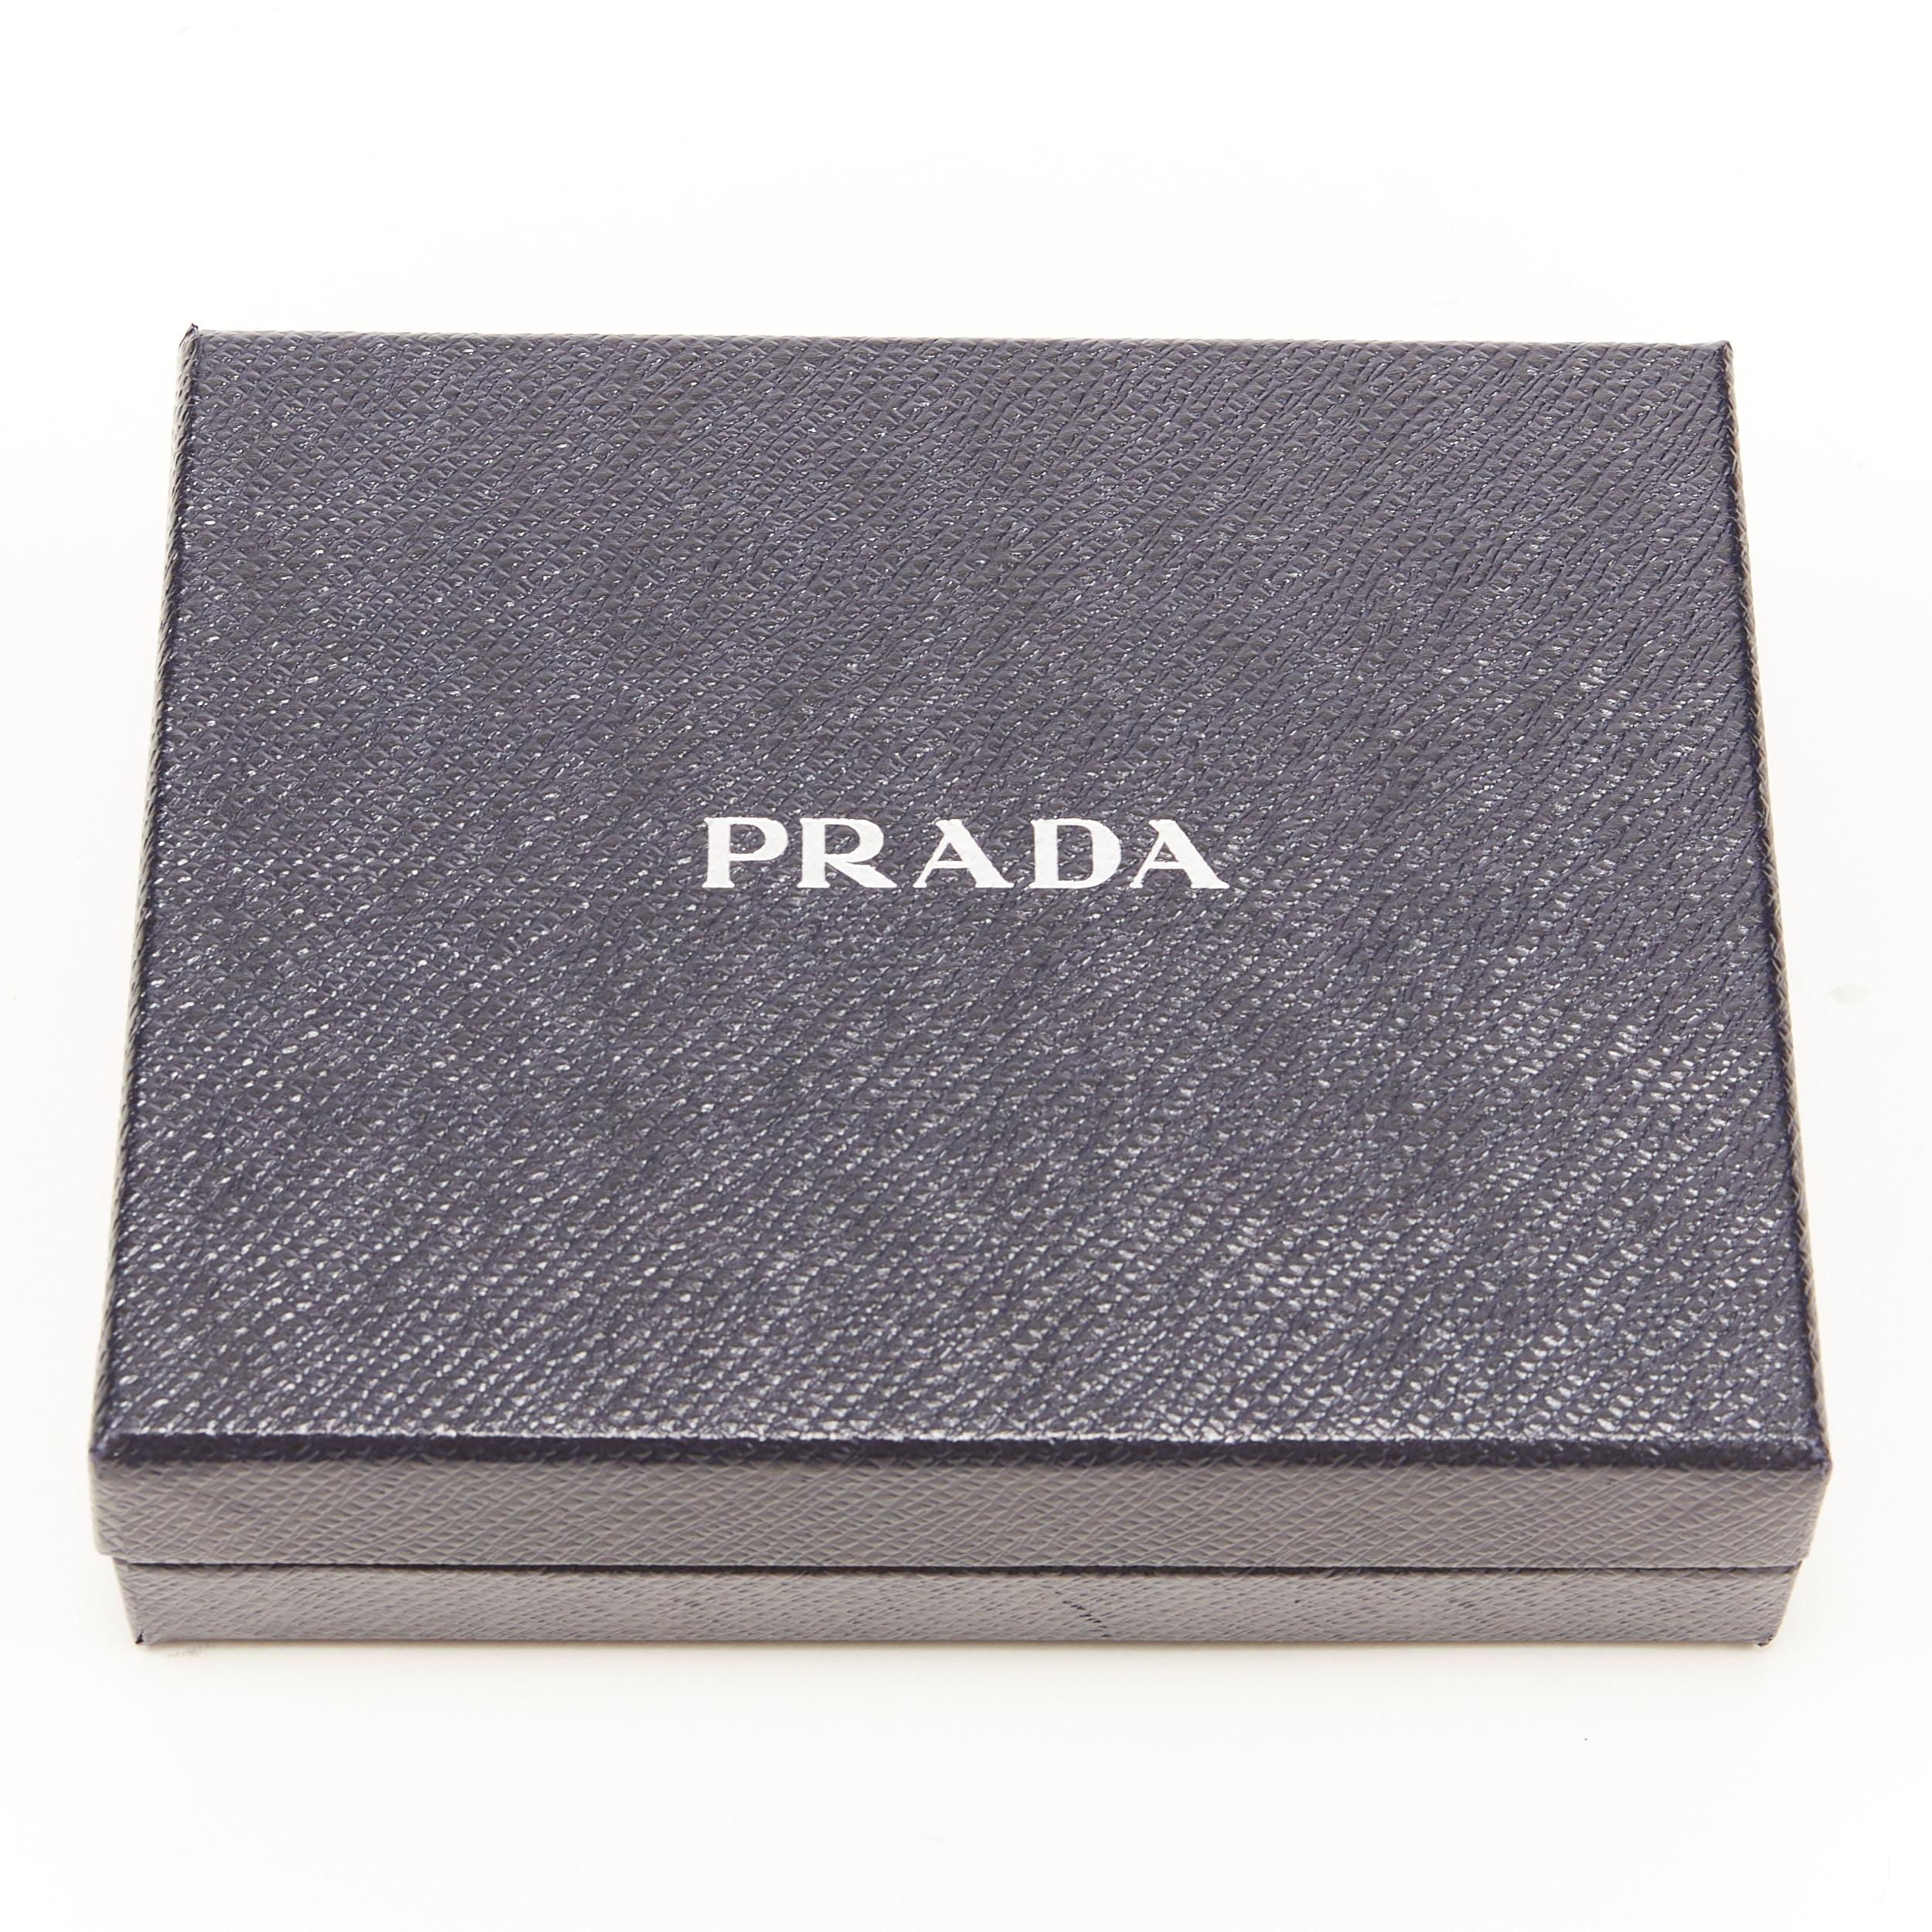 Women's new PRADA metallic silver saffiano leather triangle crossbody circle zip pouch